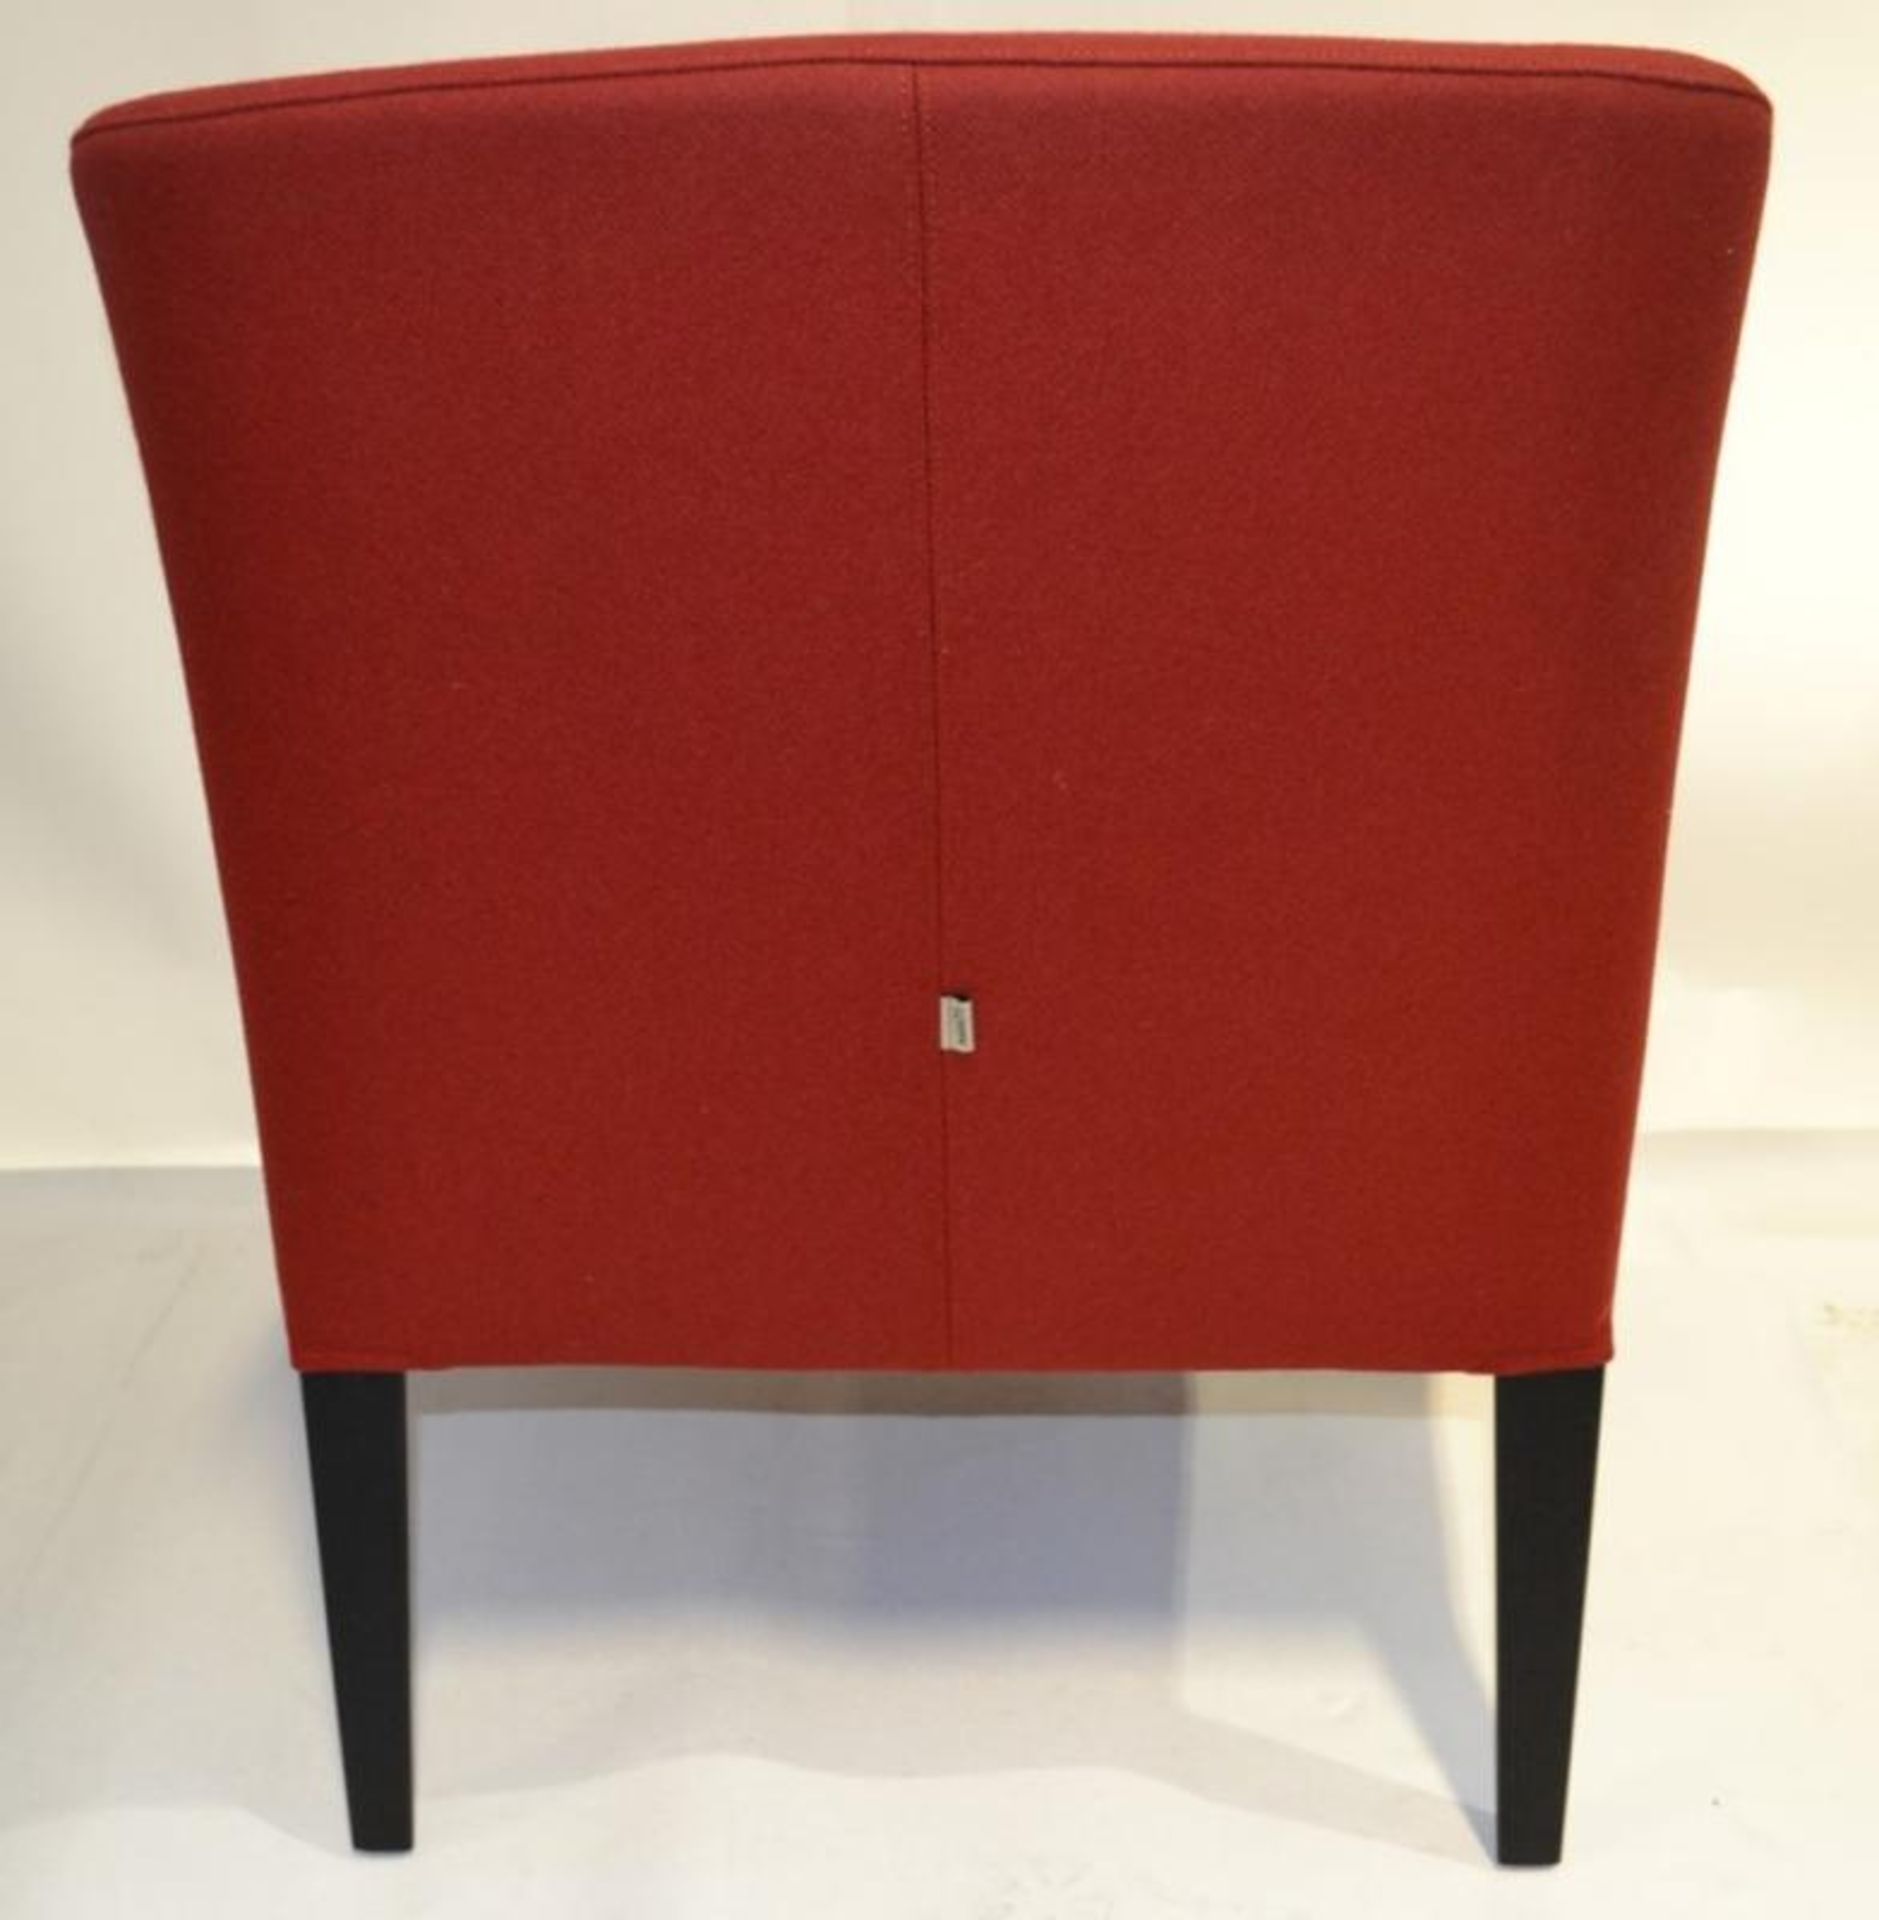 1 x B&B ITALIA Maxalto "Agathos" Armchair In Bright Red With Black Legs - Designed By Antonio Citter - Image 6 of 7